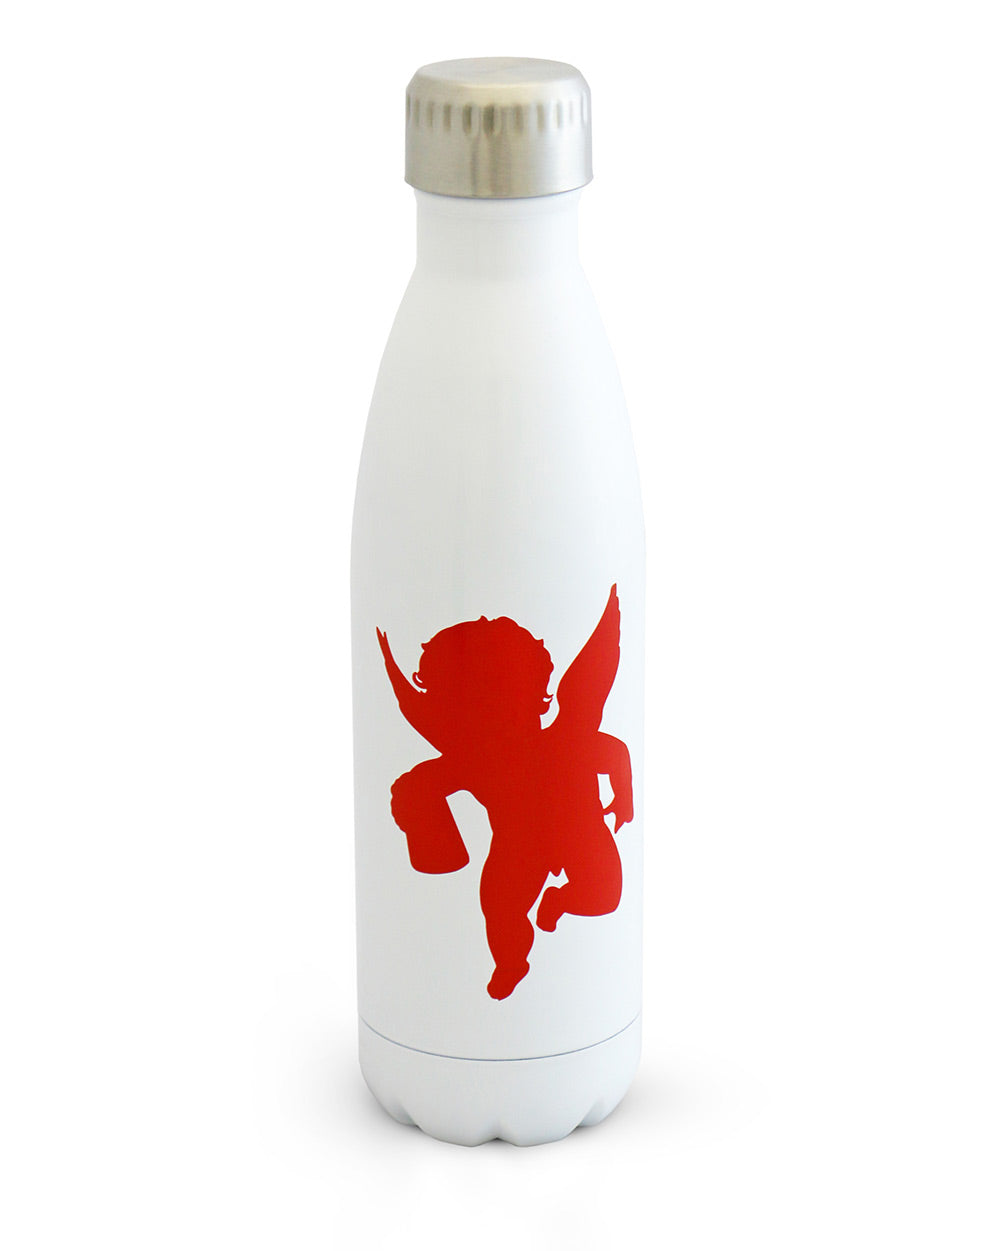 Little Creatures Metal Bottle -  Beer Gear Apparel & Merchandise - Speights - Lion Red - VB - Tokyo Dy merch